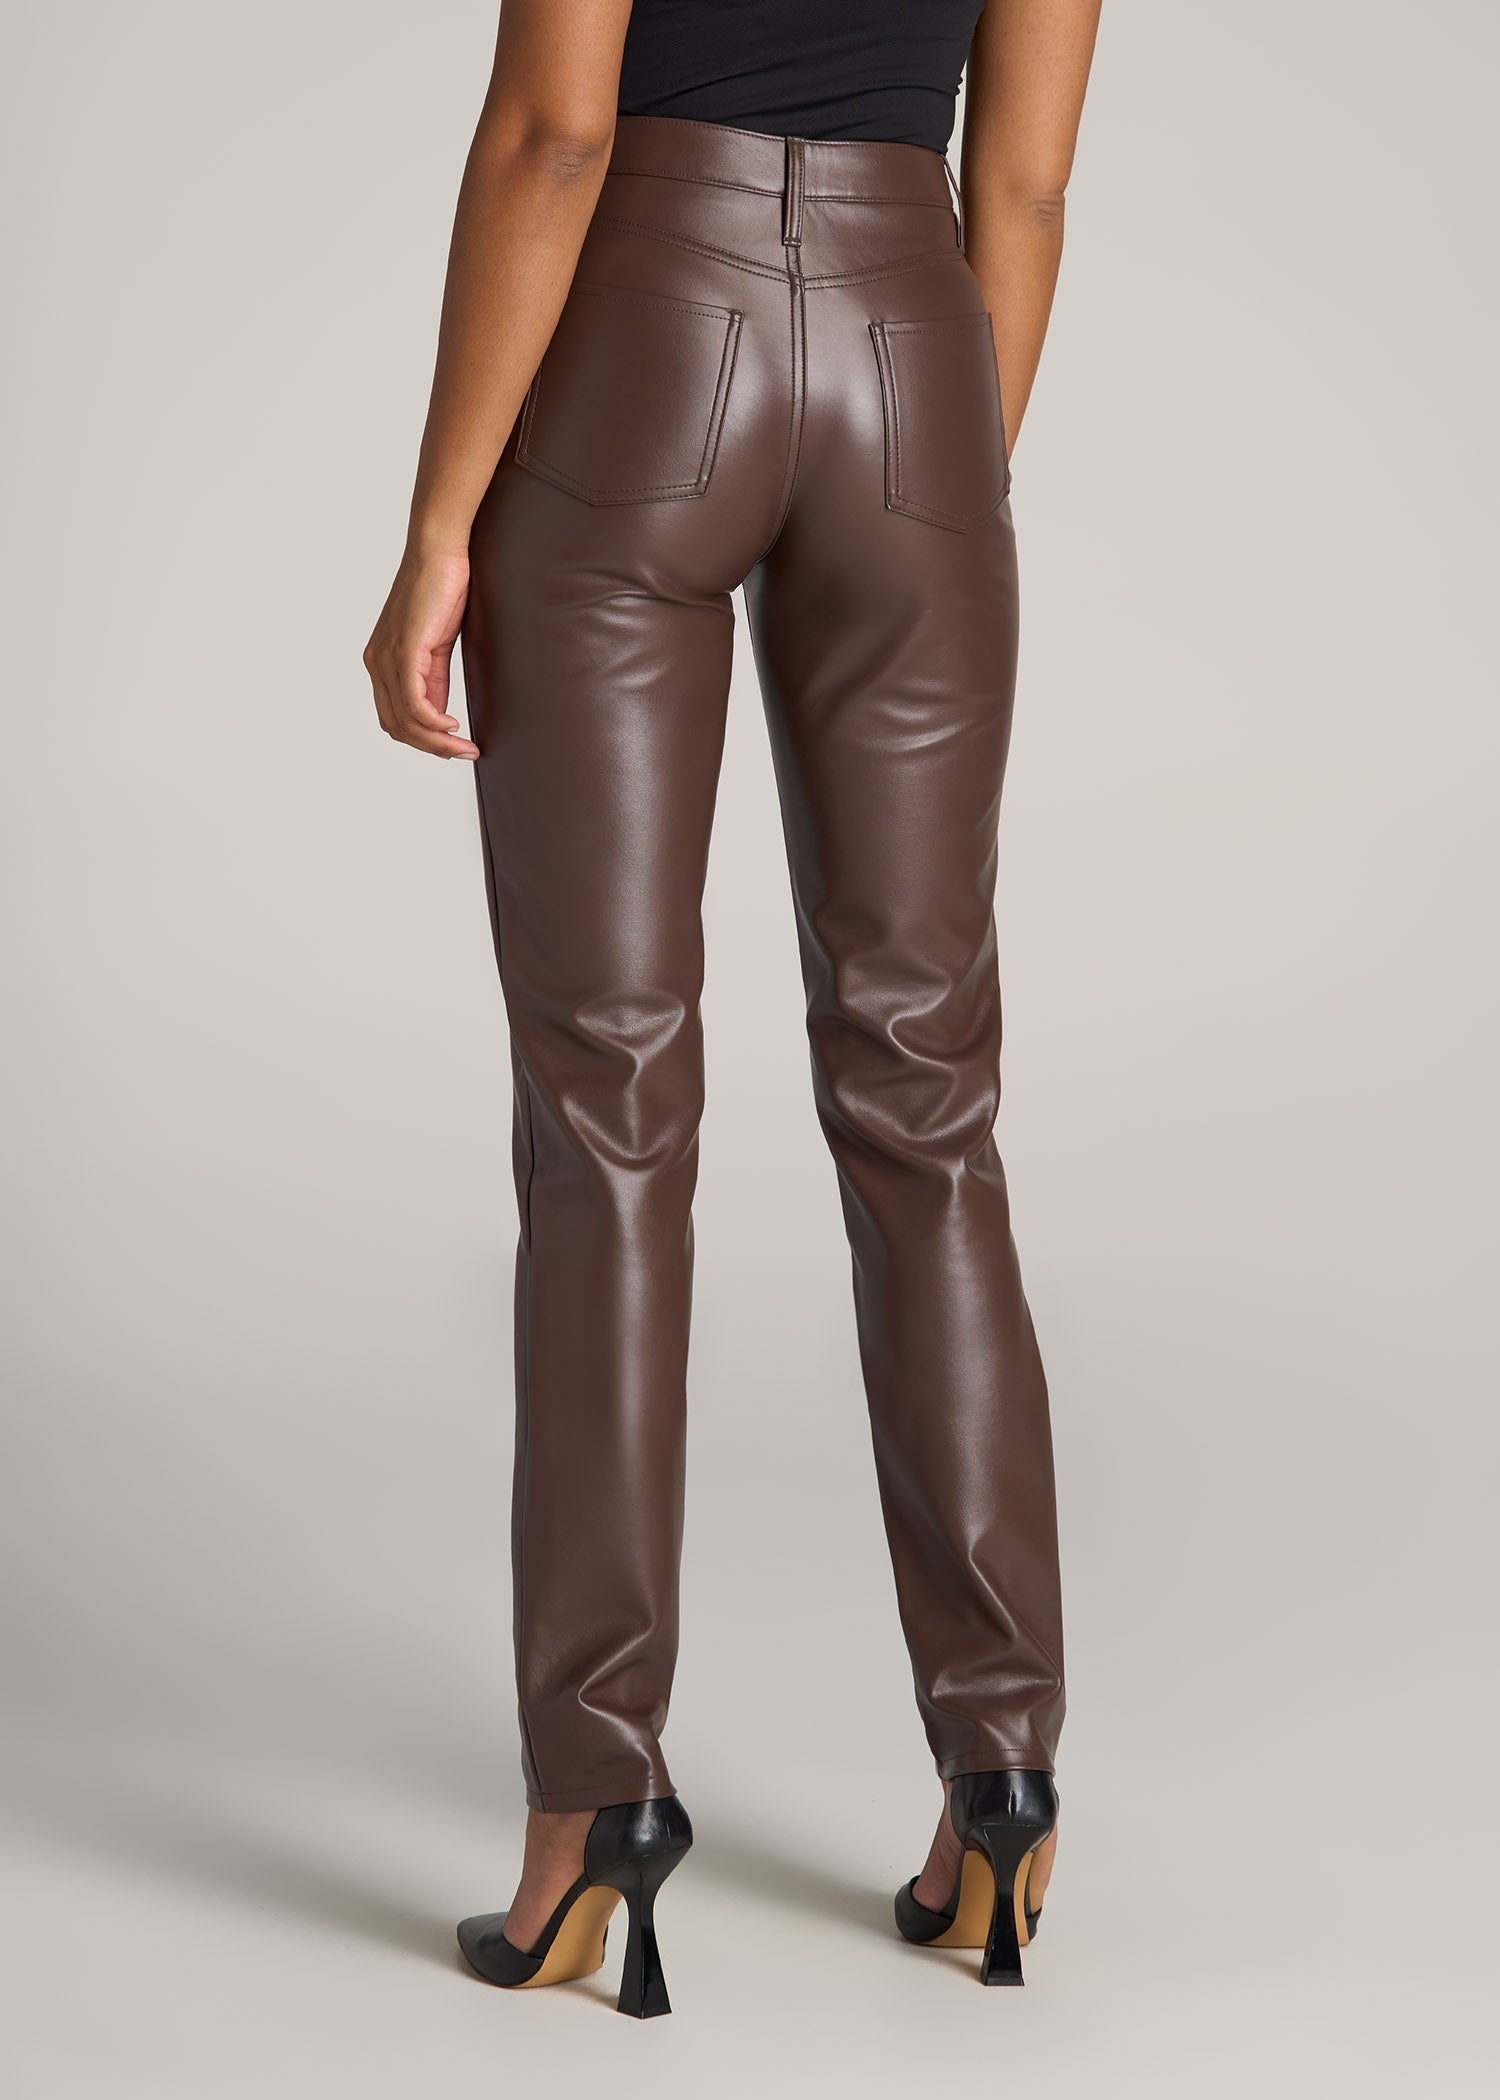 Winter Women Elastic Force Hot-Ass PU Tight Leather Pants Yoga Pants Hip  Pants M | eBay